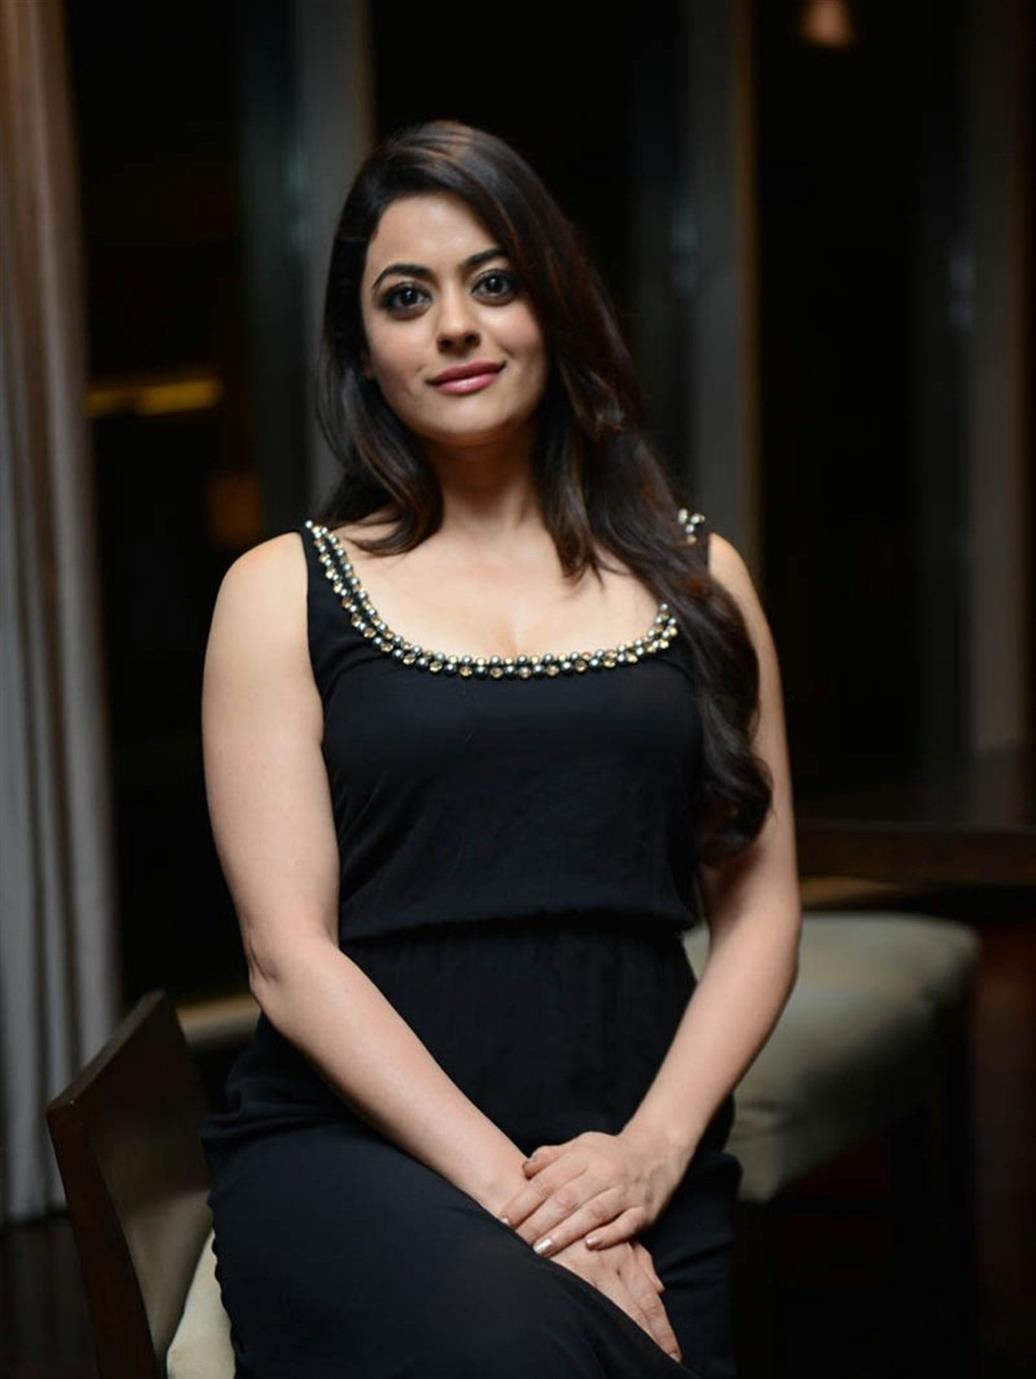 Shruti Looking Beautiful In Black Dress